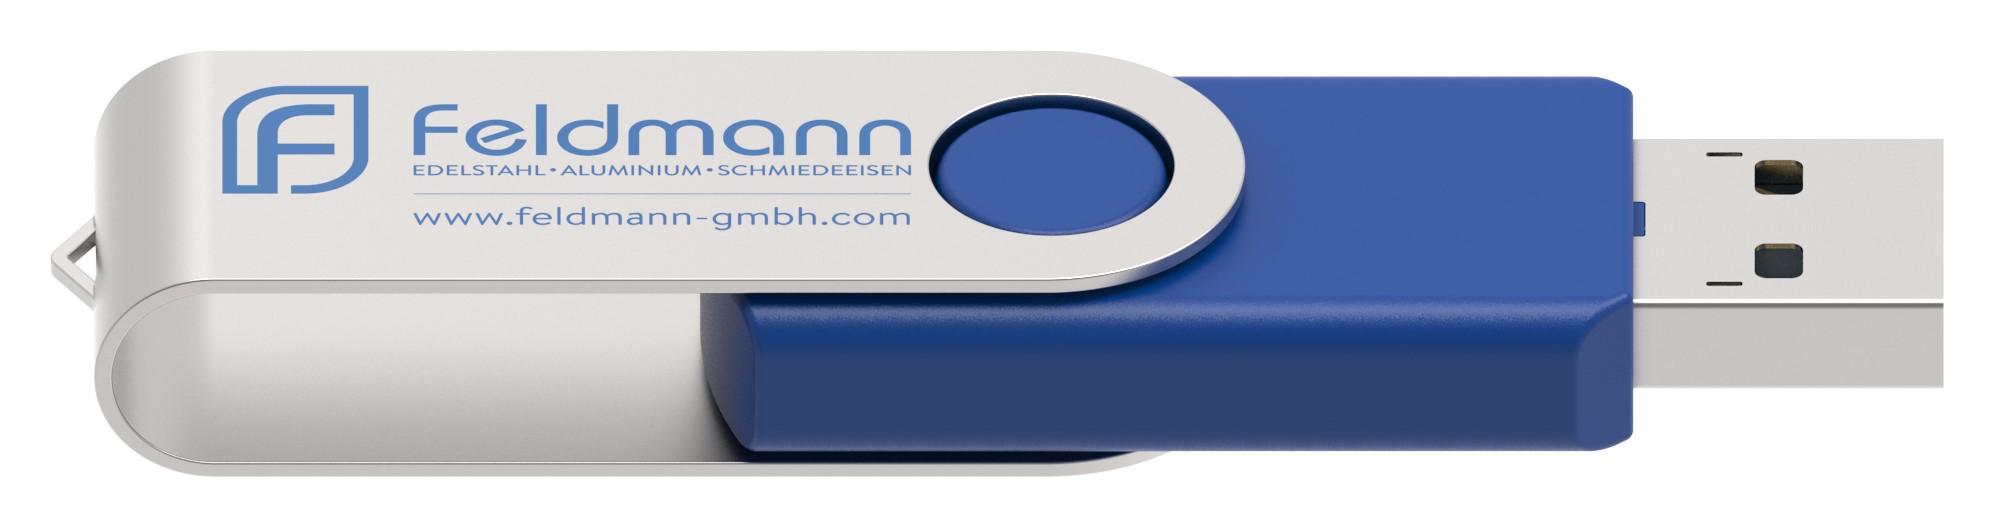 Feldmann USB-Stick